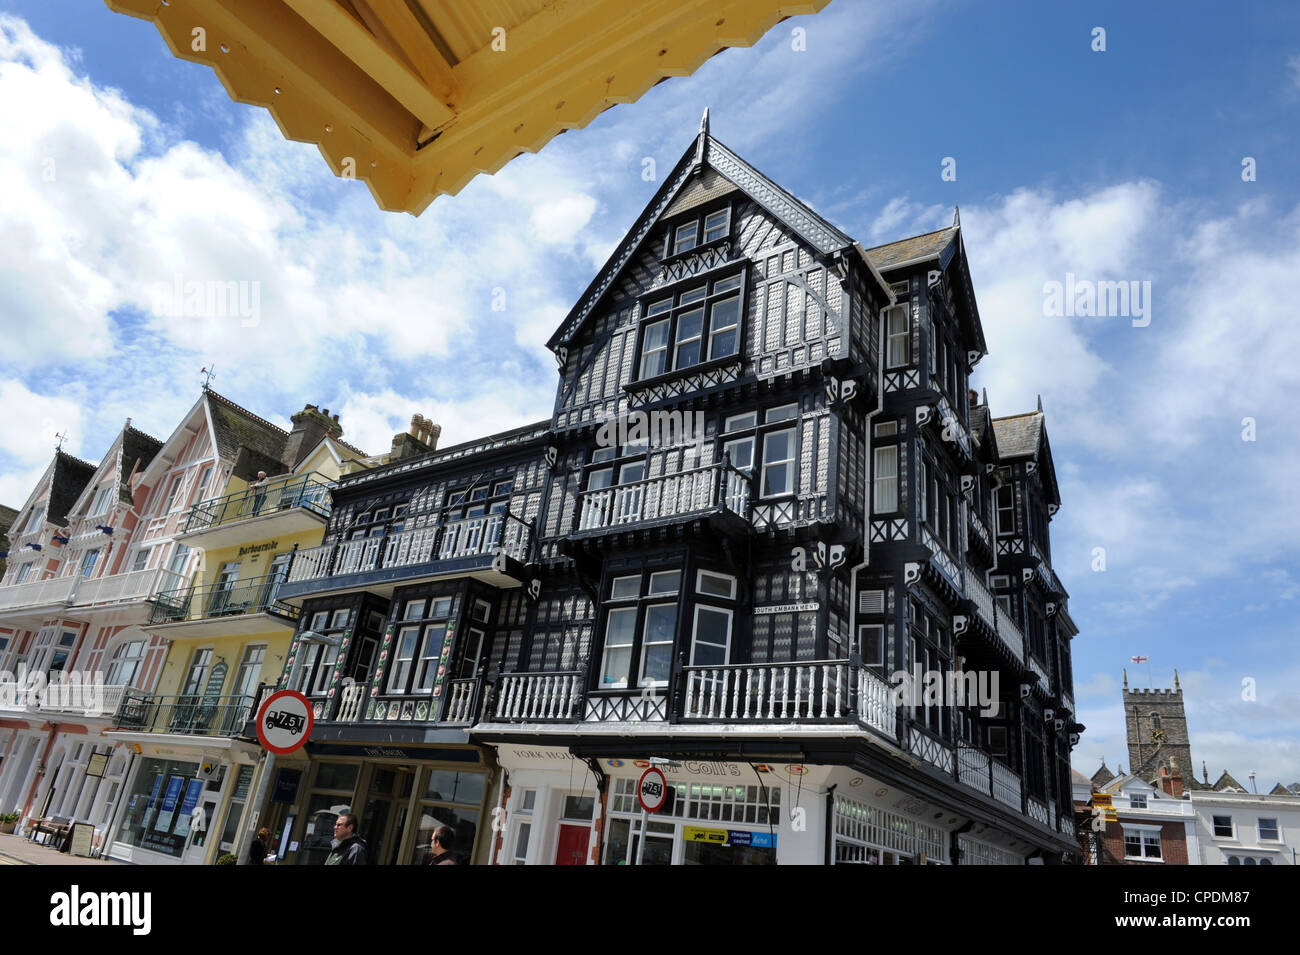 Dartmouth Devon edificios históricos del Reino Unido Foto de stock